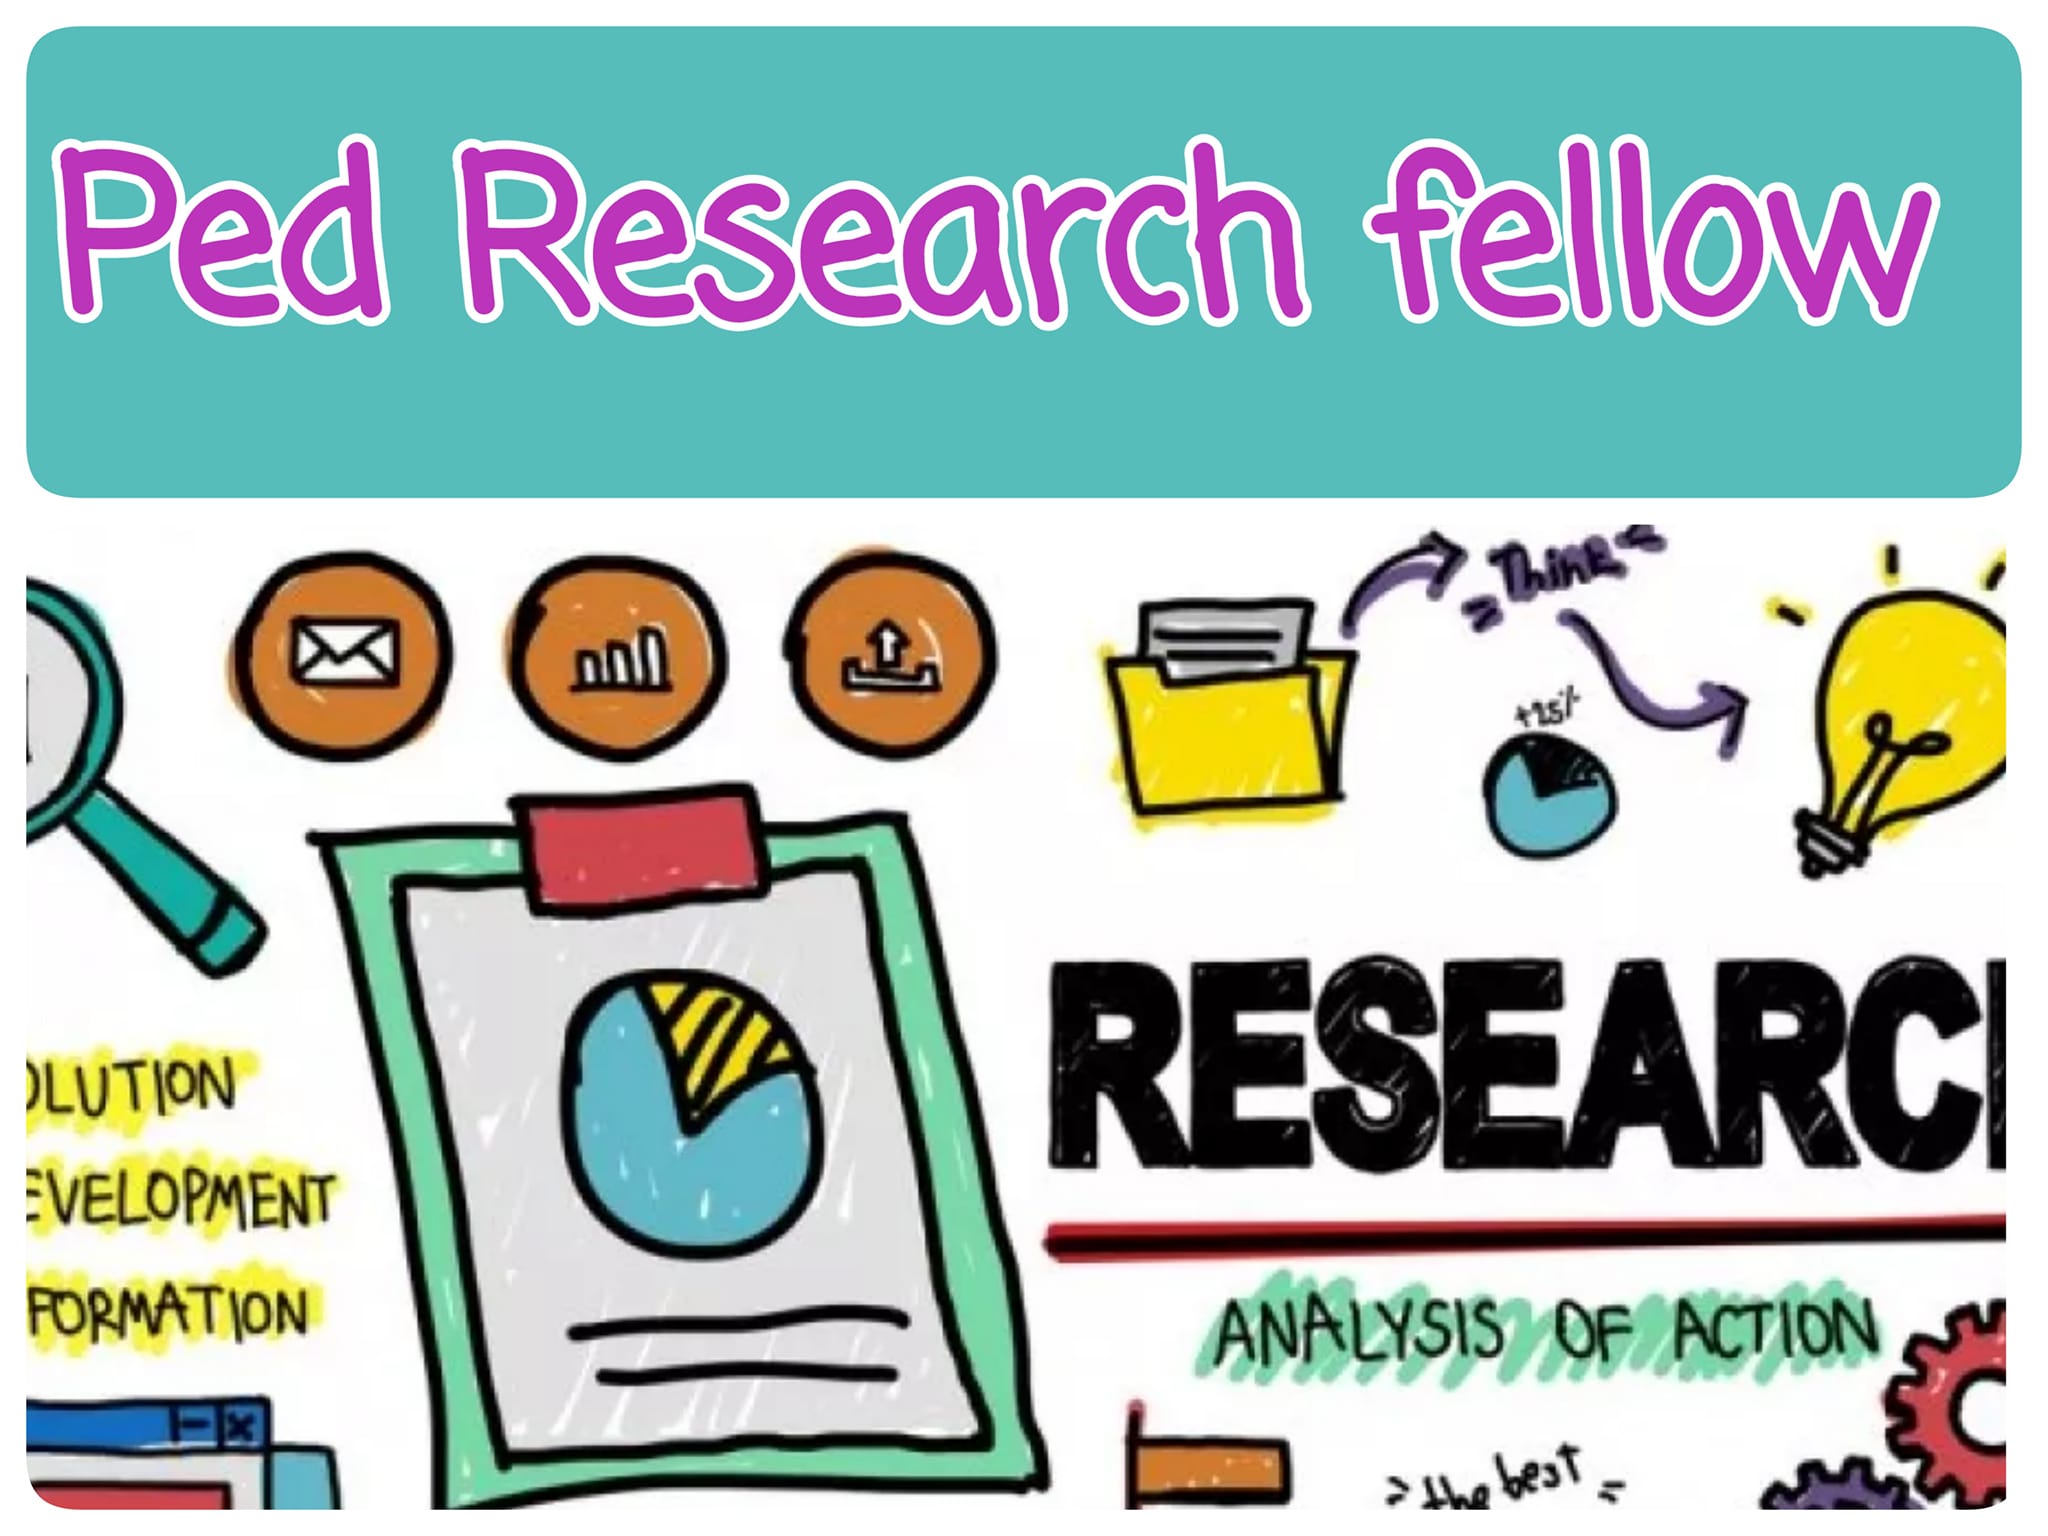 Research Fellow